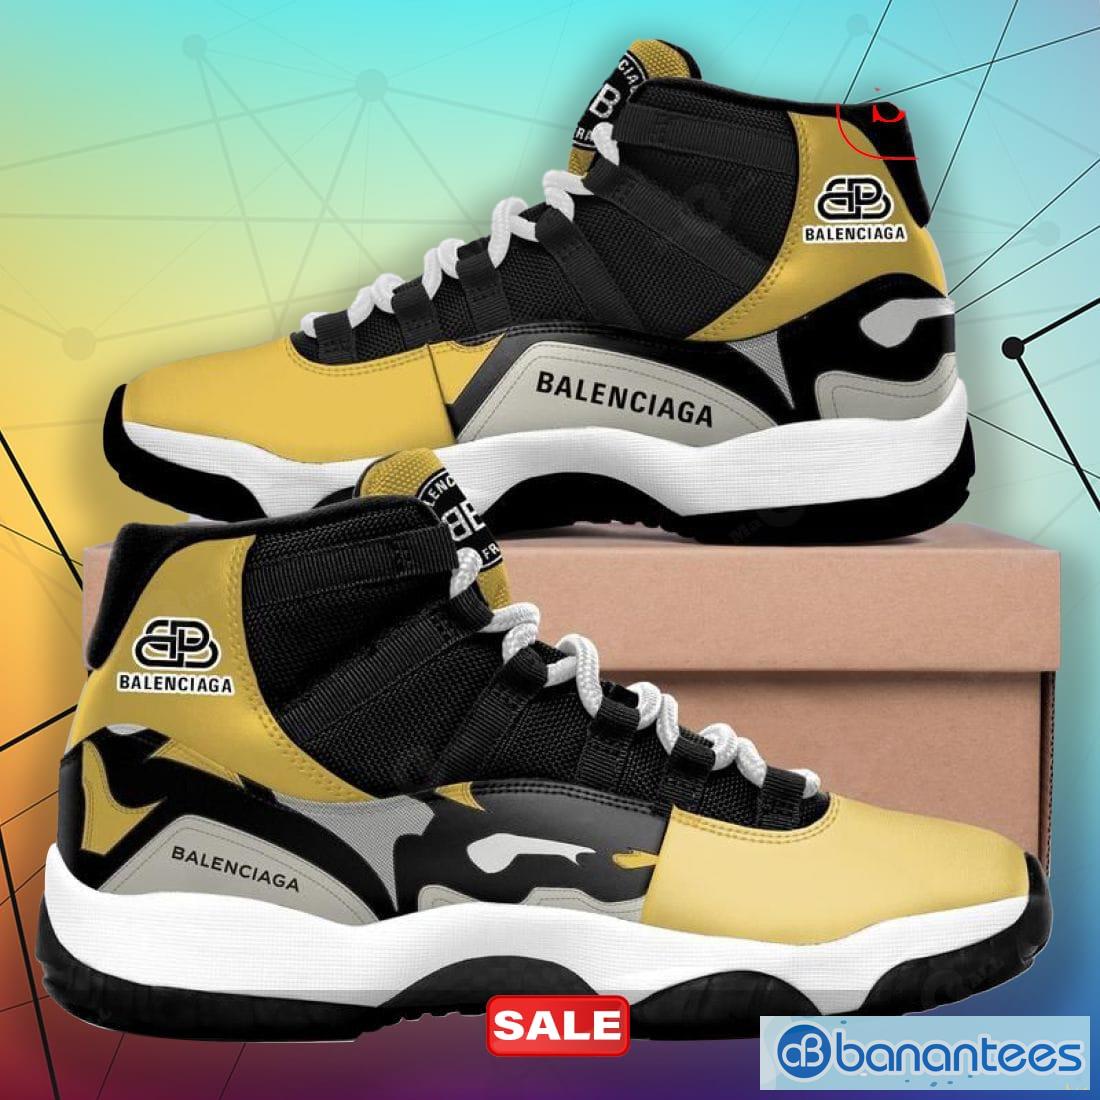 Balenciaga Black Gold Jordan 11 Sneakers Gifts Men Women Shoes Design - Banantees